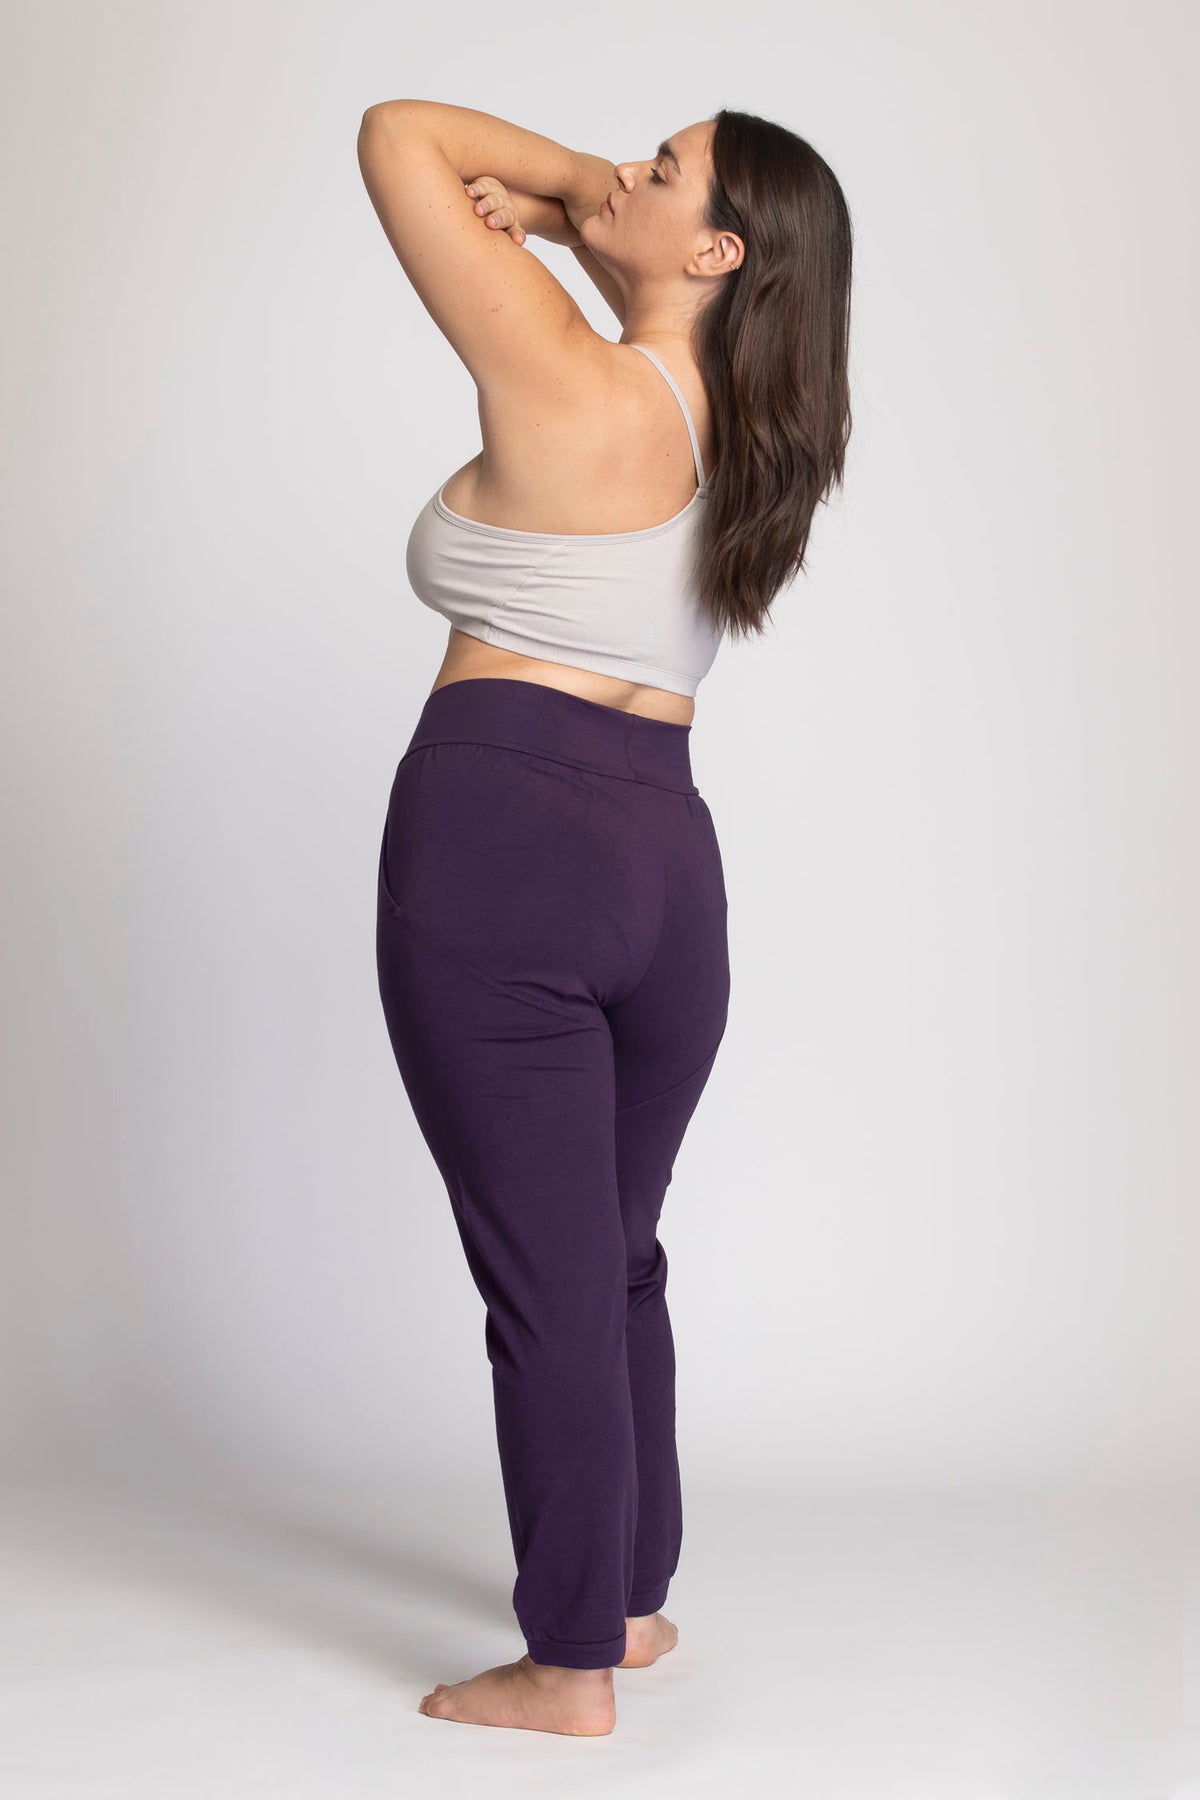 Slouchy Unisex Yoga Pants